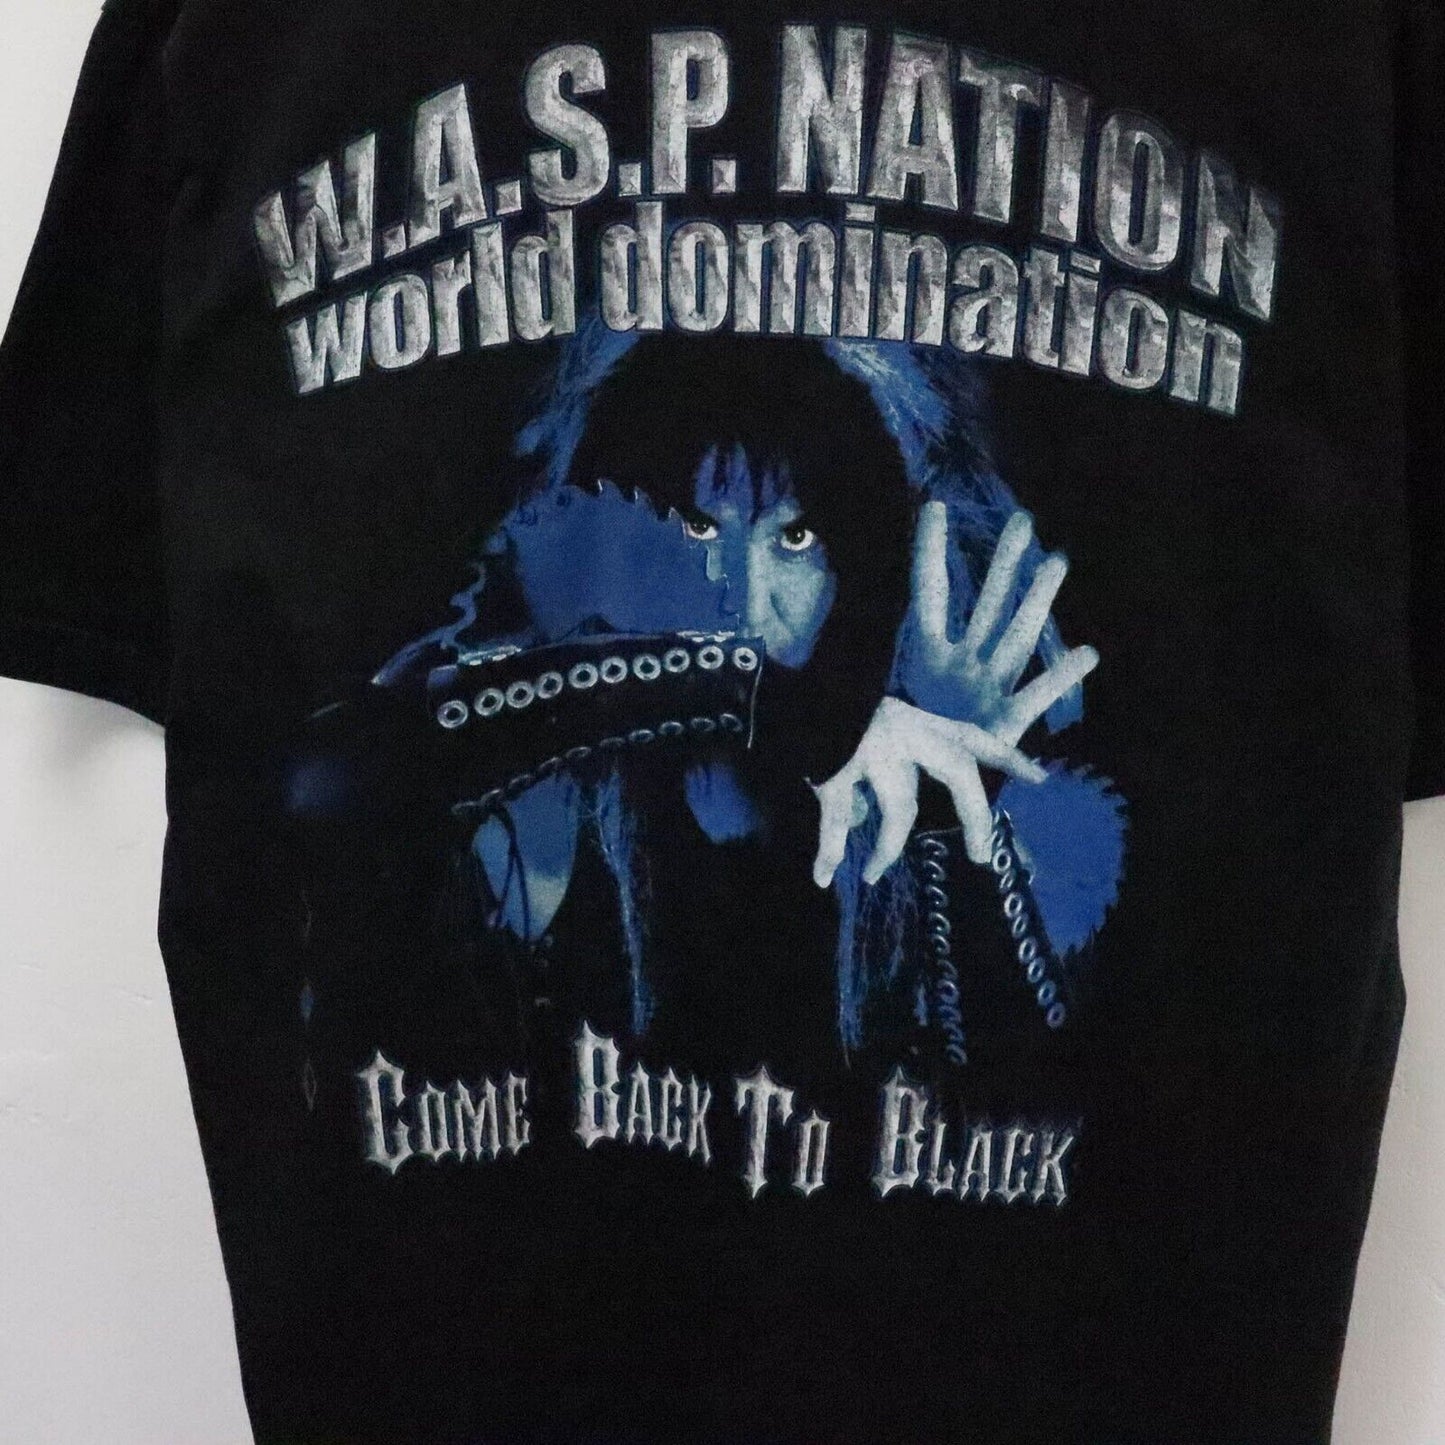 W.A.S.P T-Shirt Size M